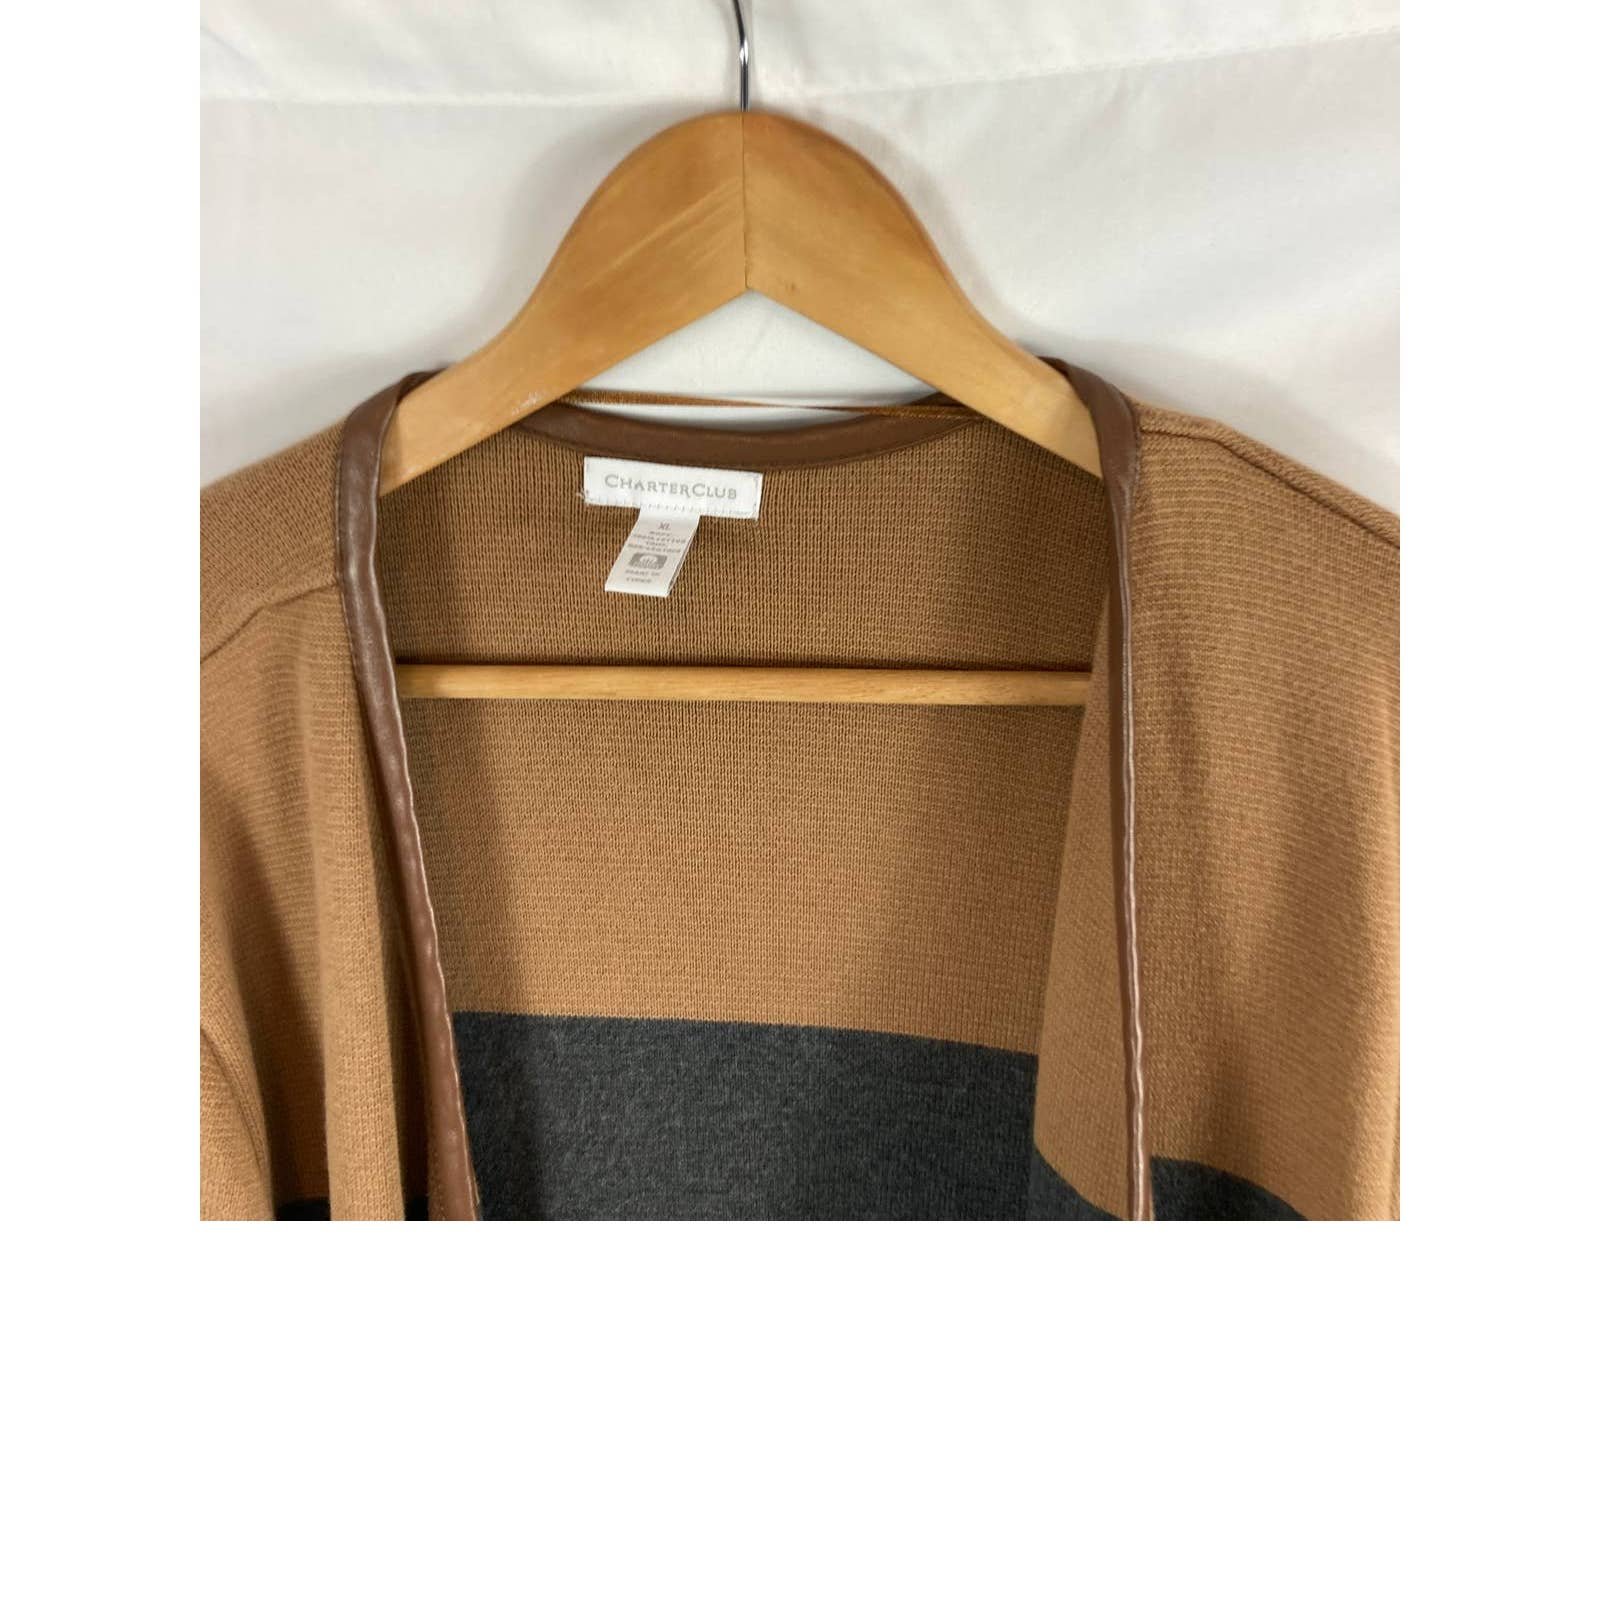 Popular Charter Club Striped Longline sweater jacket size XL p76pzCEBj Great